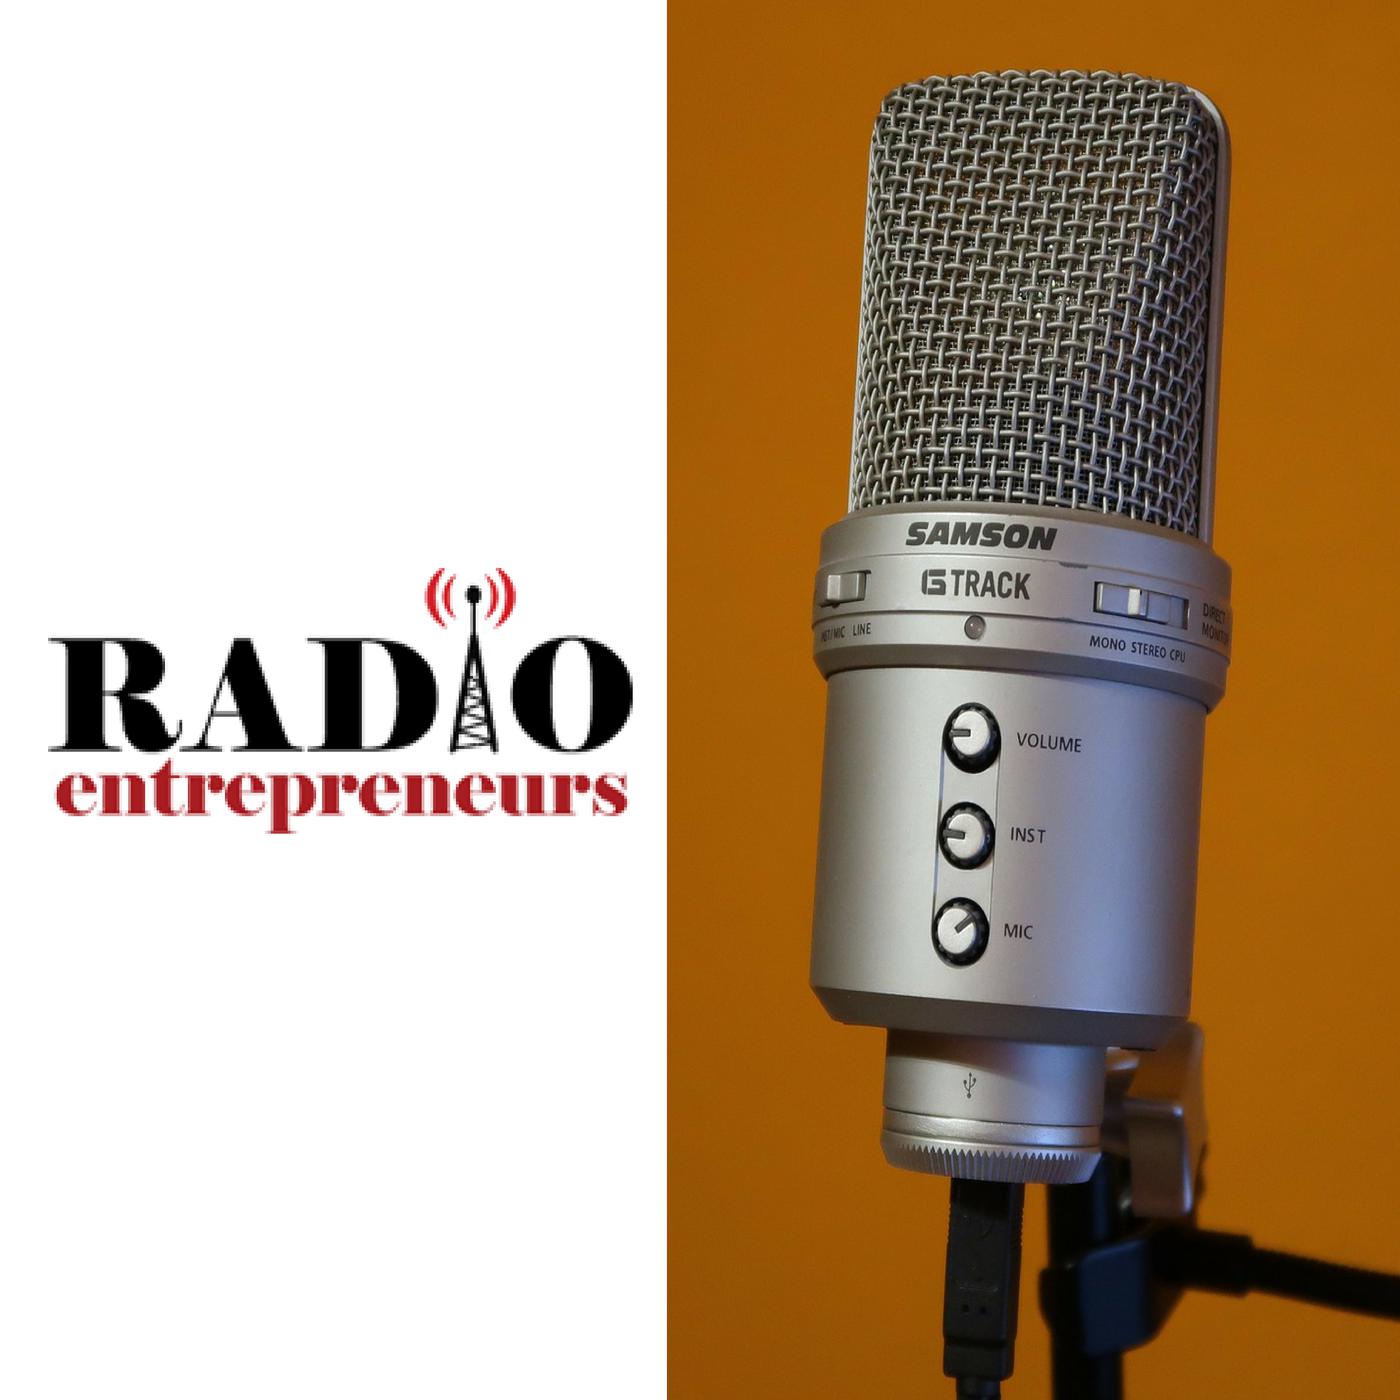 Matej Harangozo Featured on Radio Entrepreneurs Podcast Jan 19, 2021